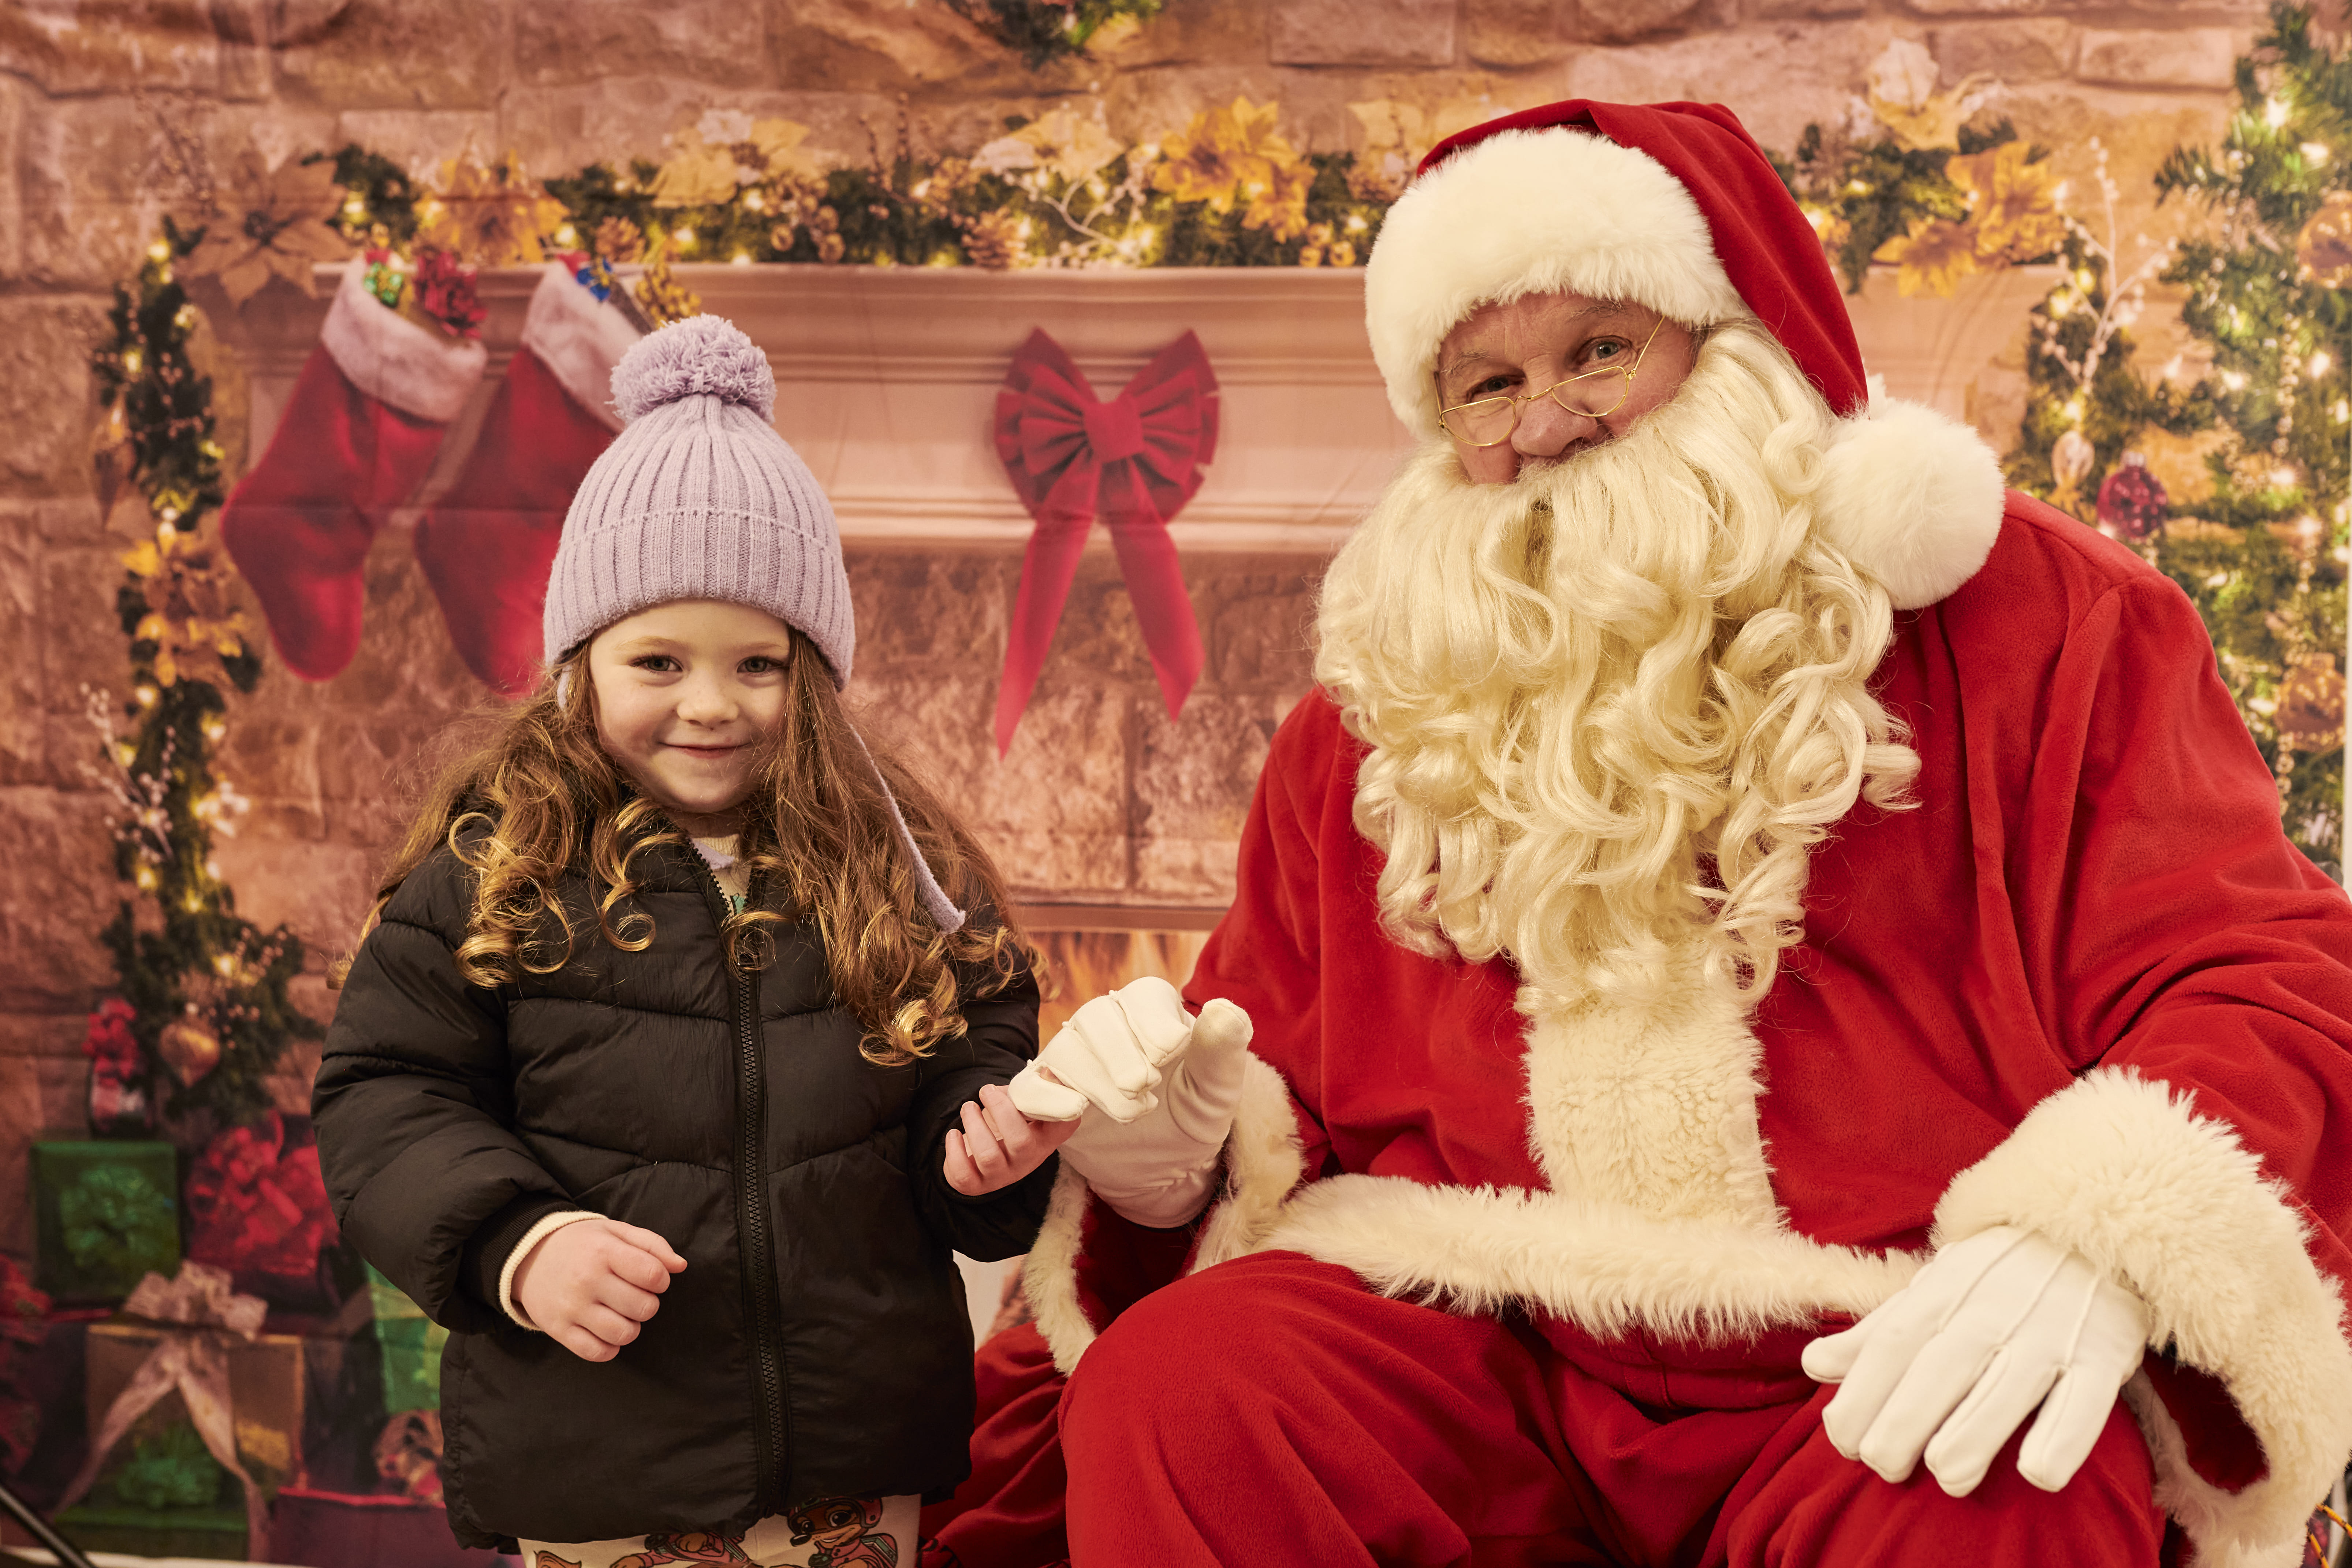 Santa spreads festive cheer at Springfield's Village developments